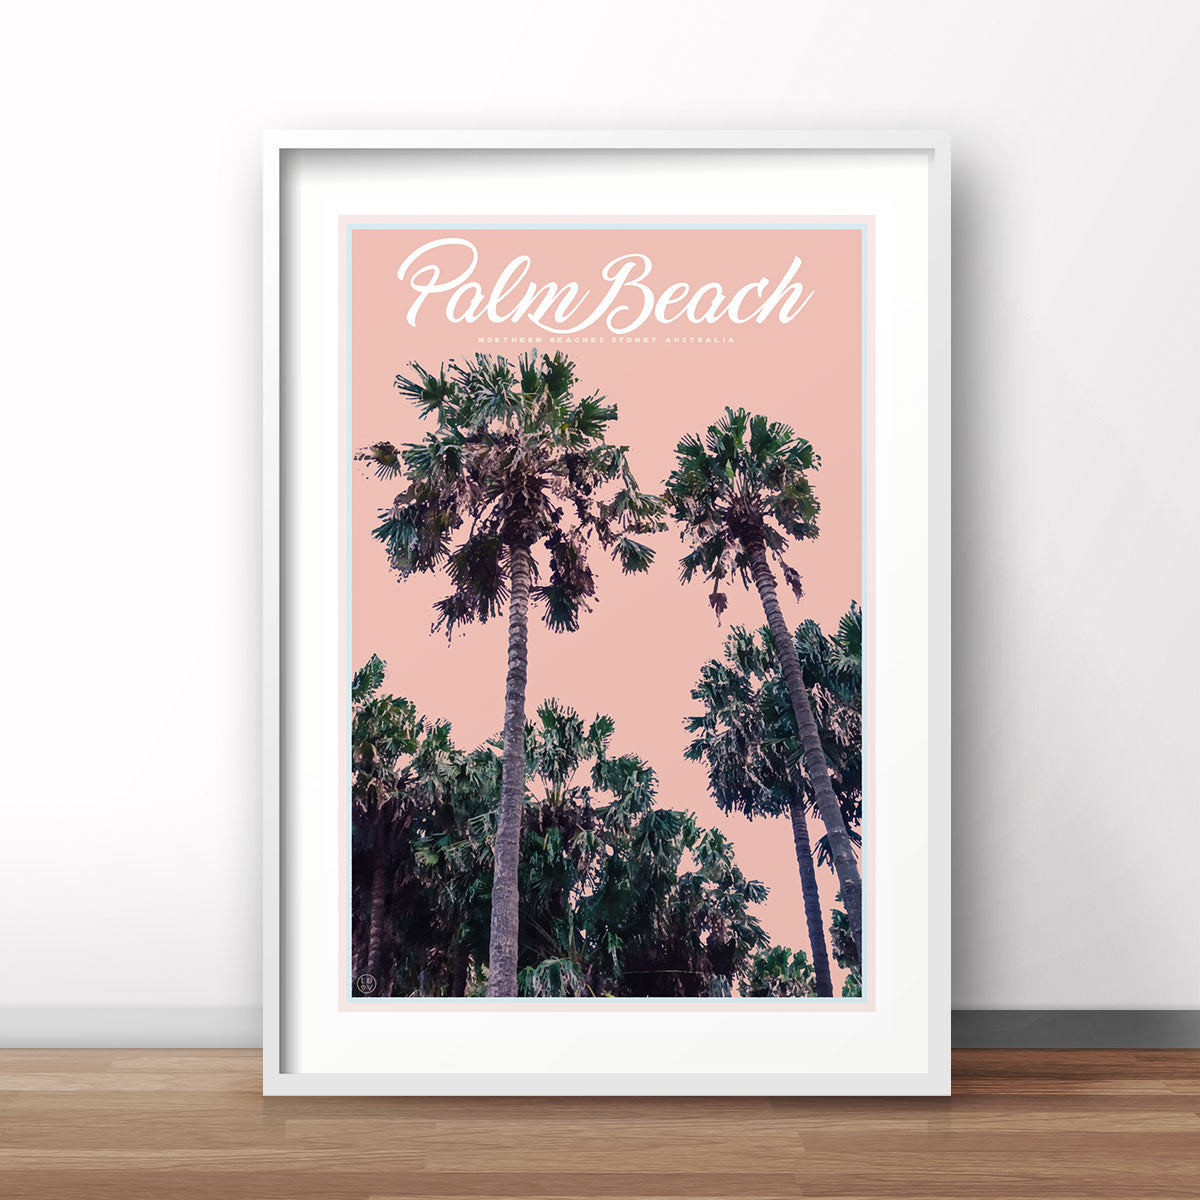 Palm Beach Palms - Sydney - original design print by Placesweluv 